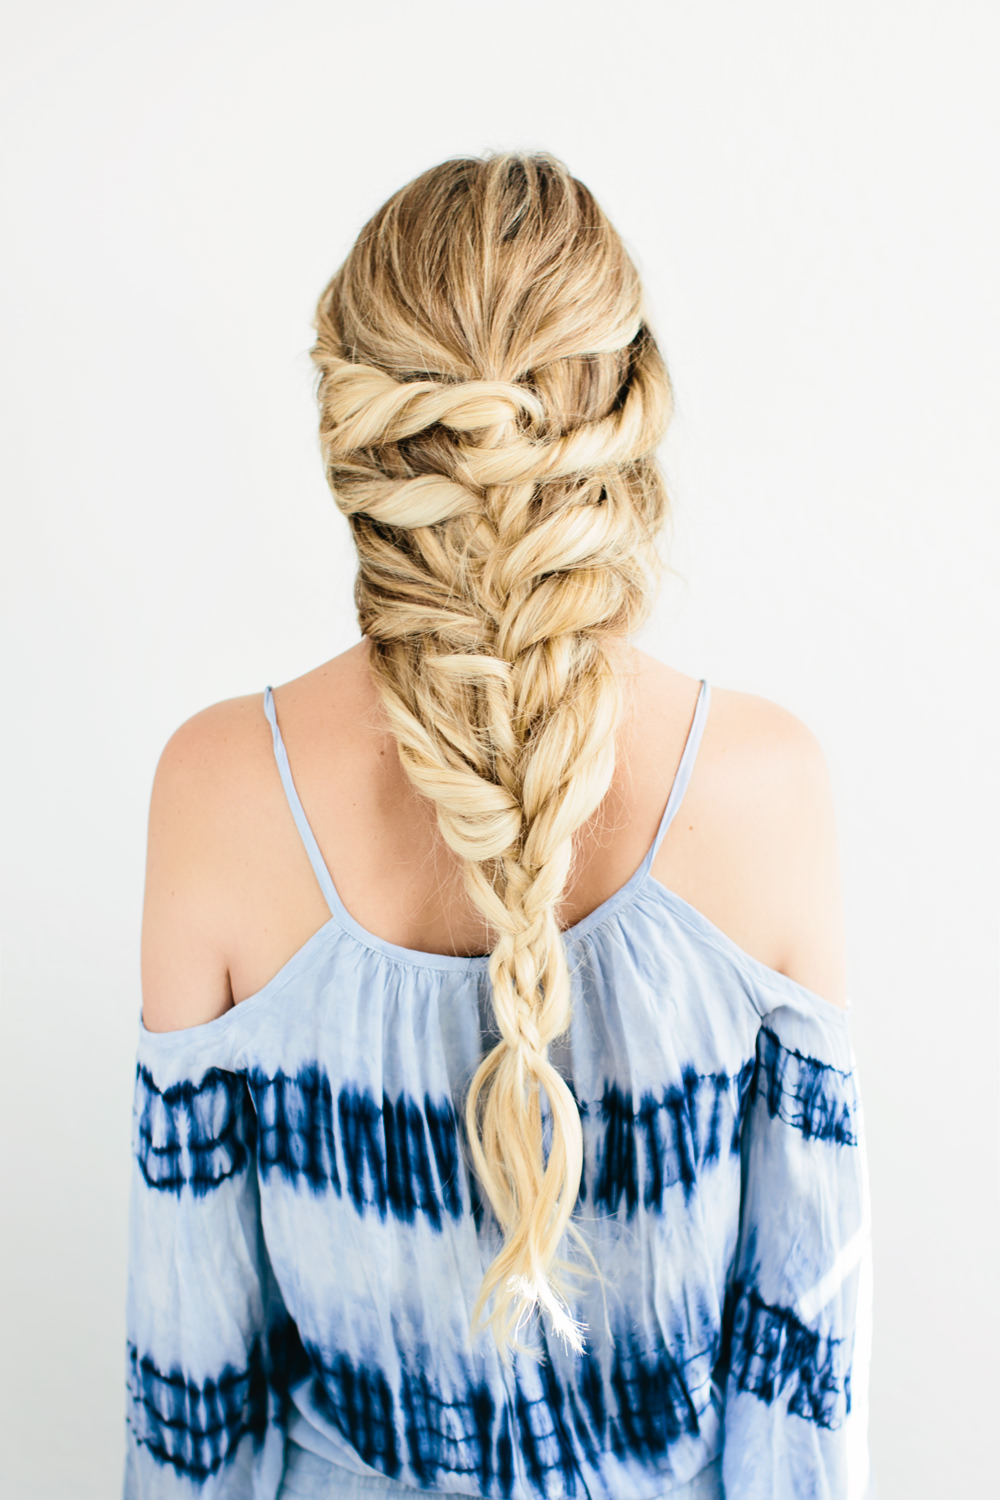 Dash of Darling shares an easy hair tutorial for a romantic mermaid twisted braid tutorial.